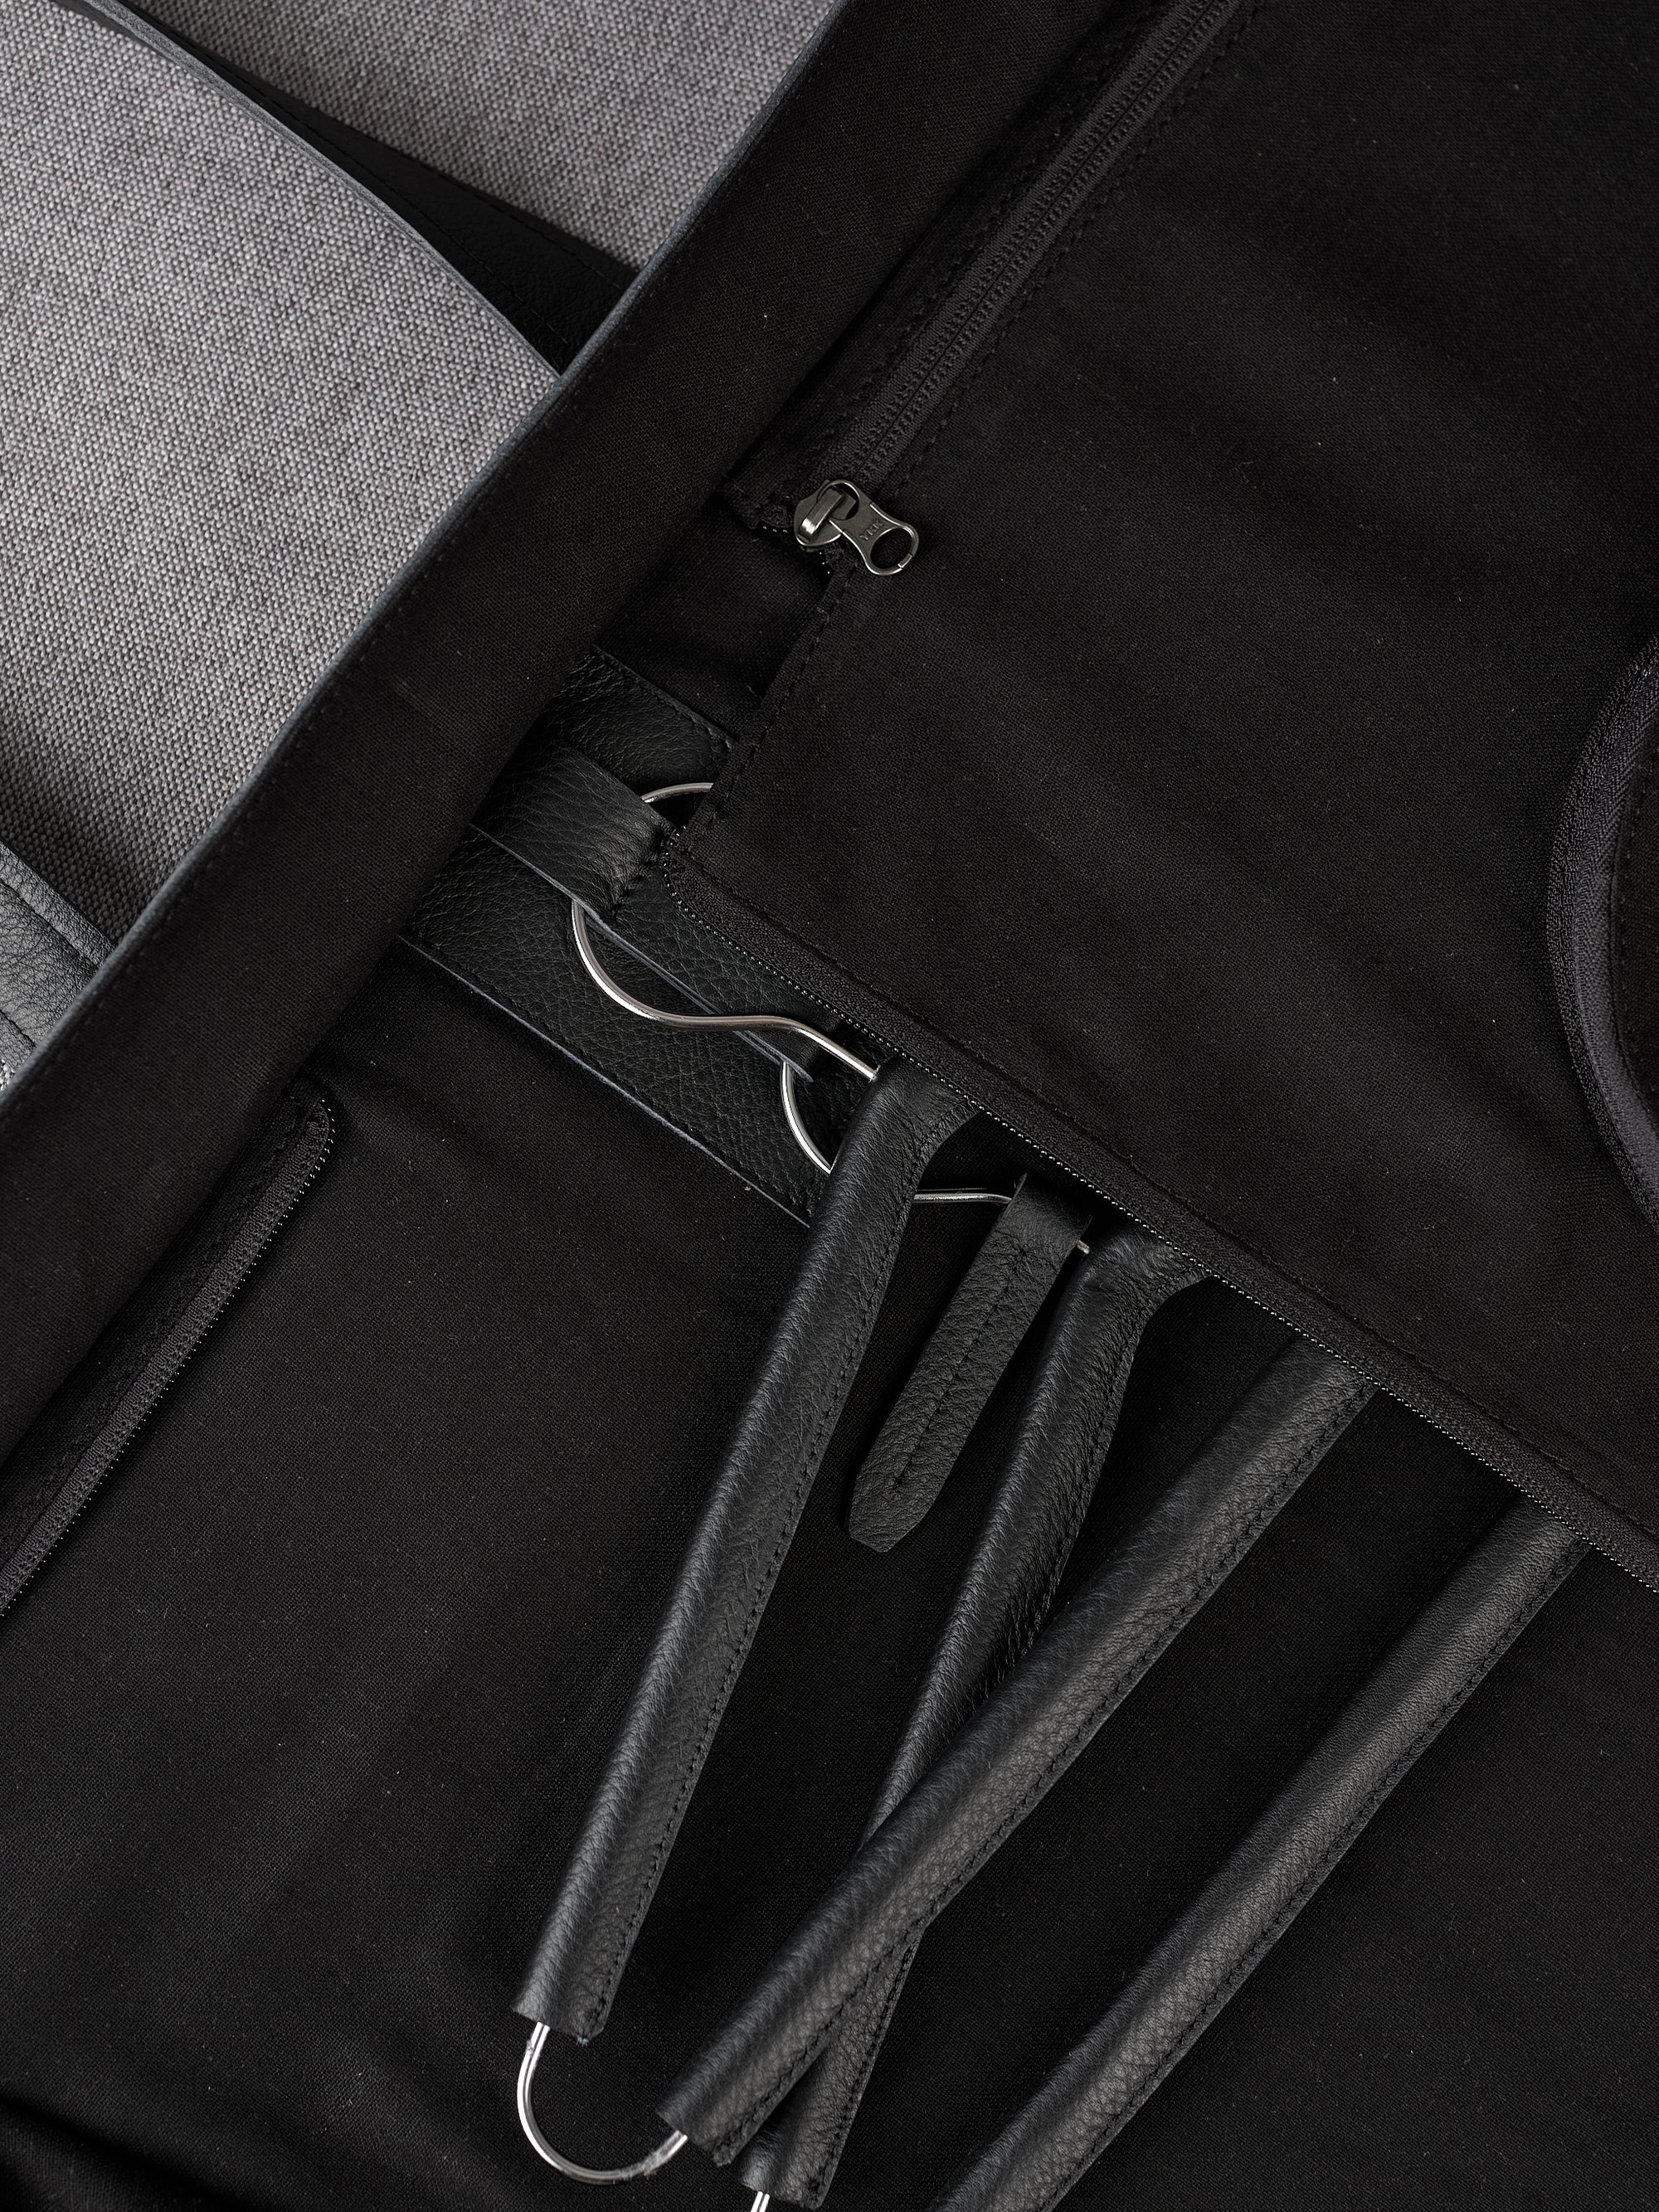 Leather wardrobe hangers. Suit Carrier Black by Capra